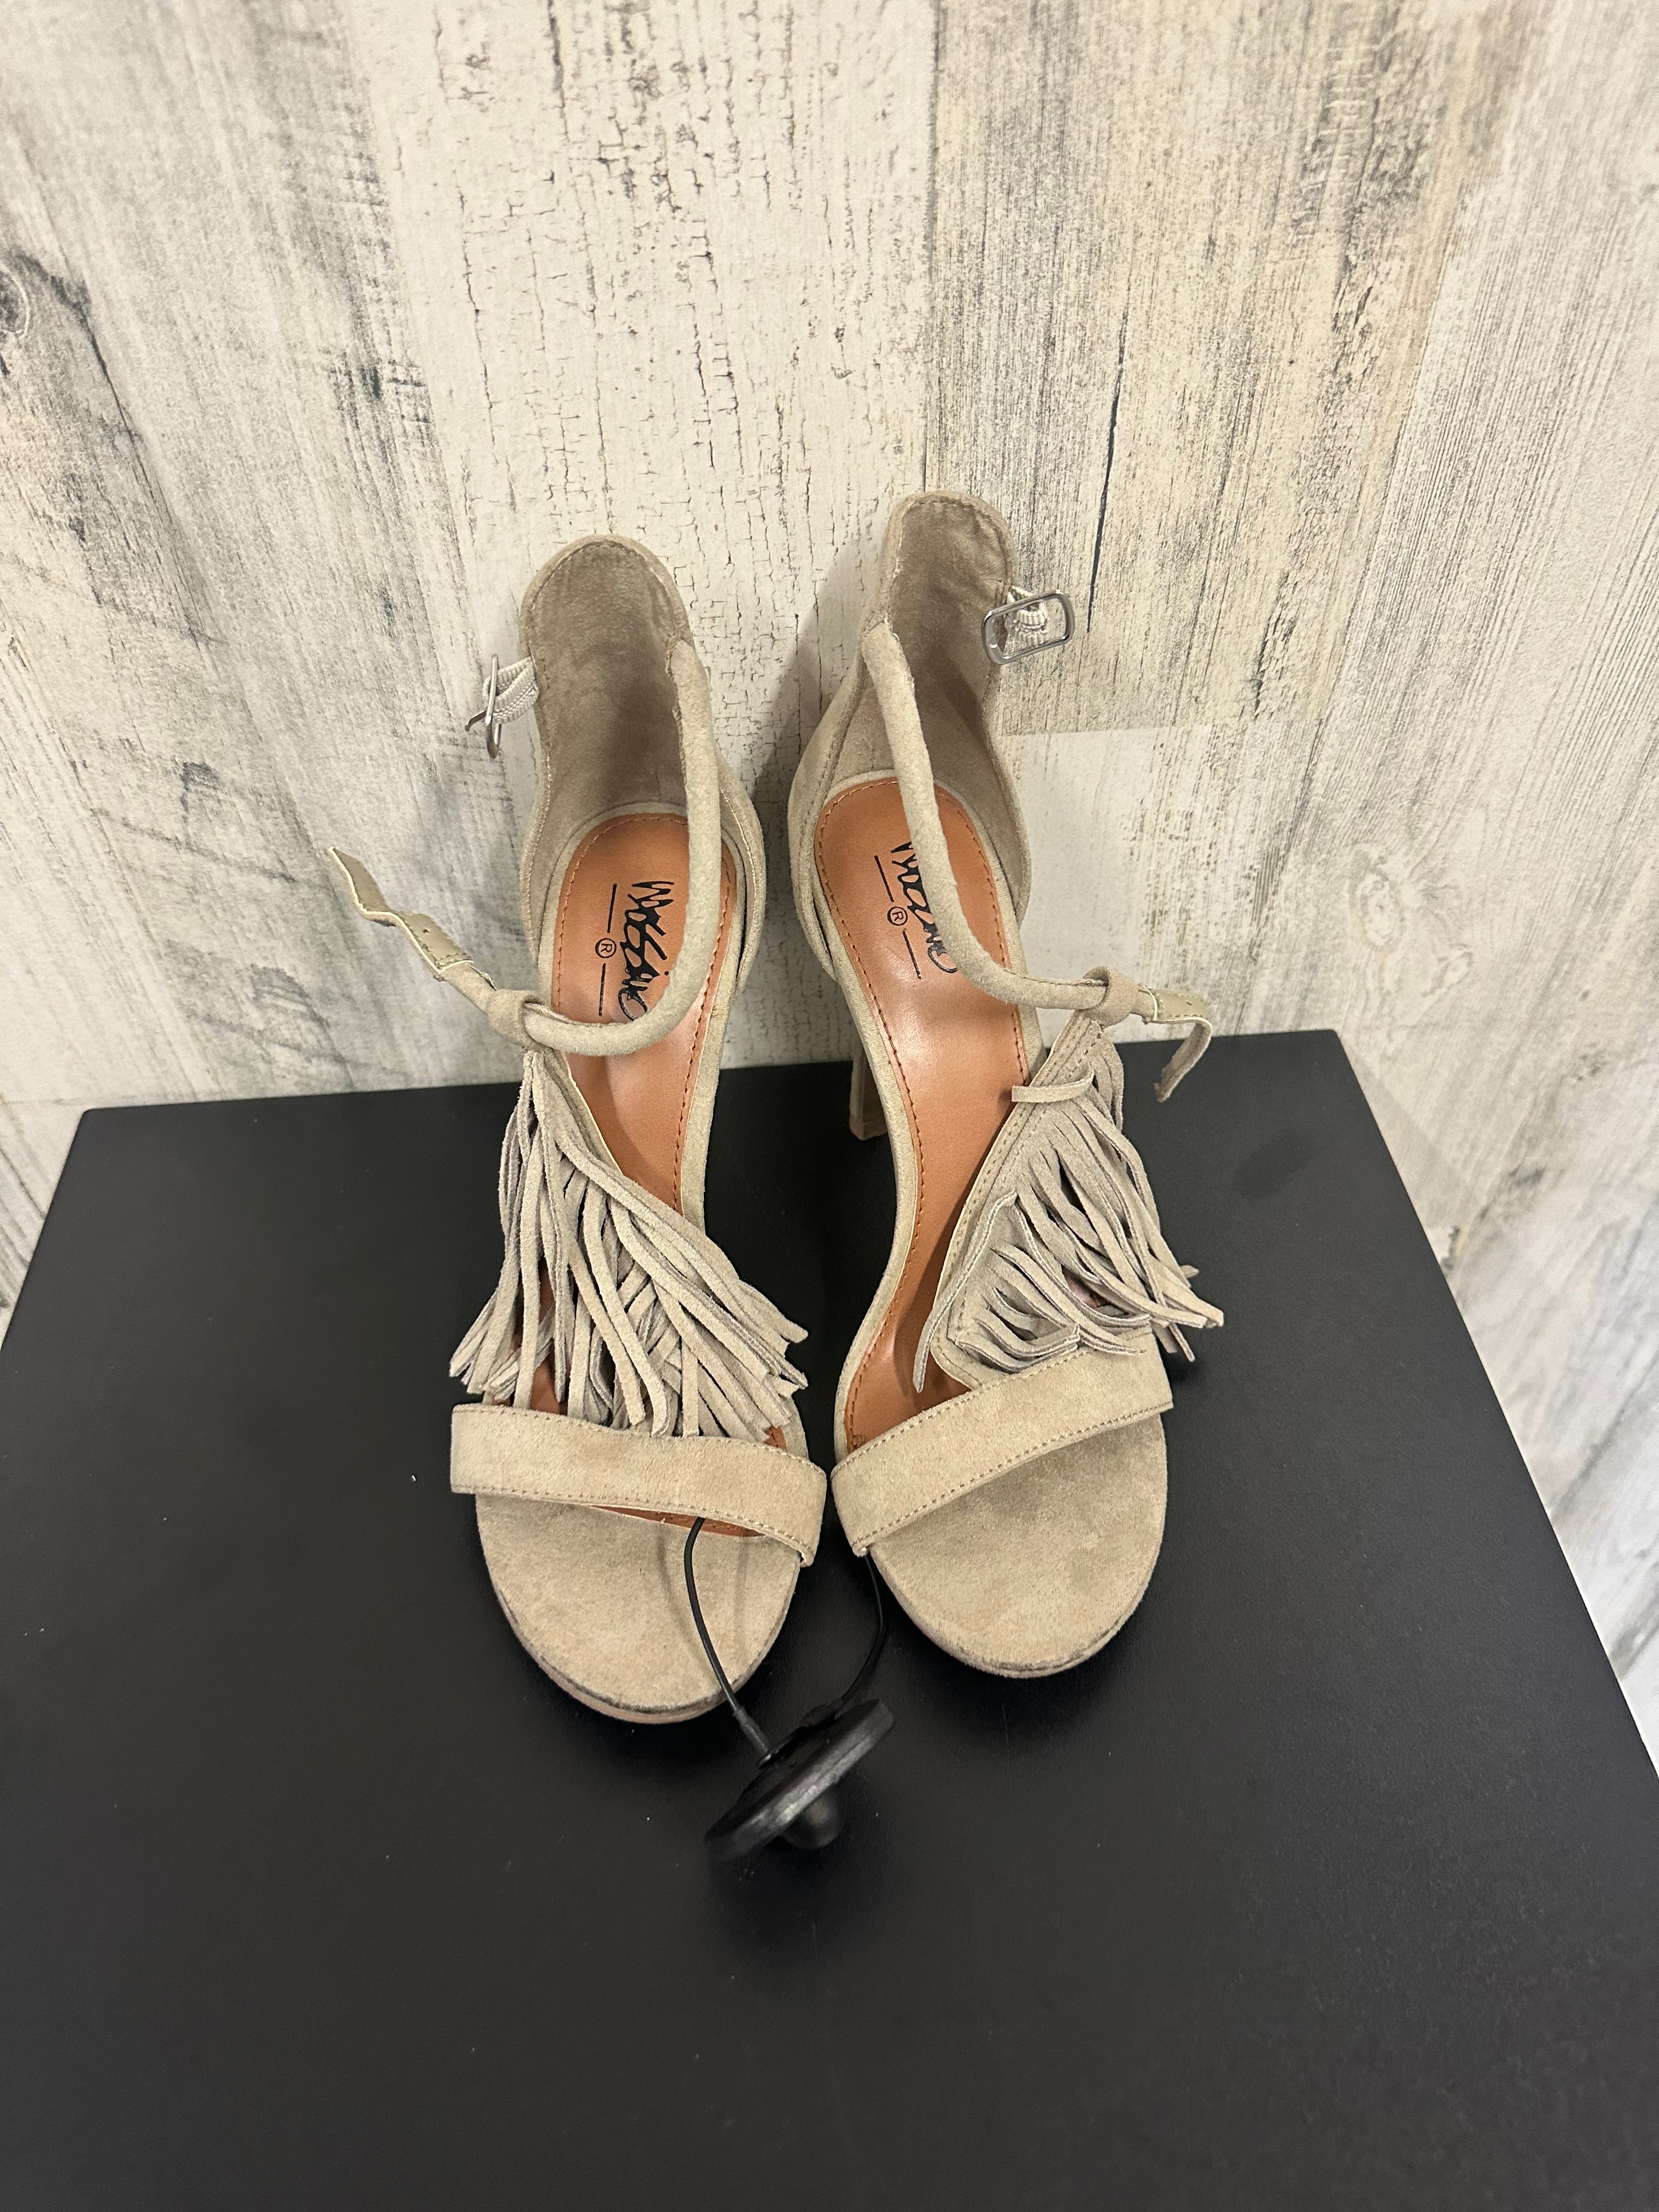 Mossimo Supply Co. | Shoes | Mossimi Nudebeige Heels | Poshmark